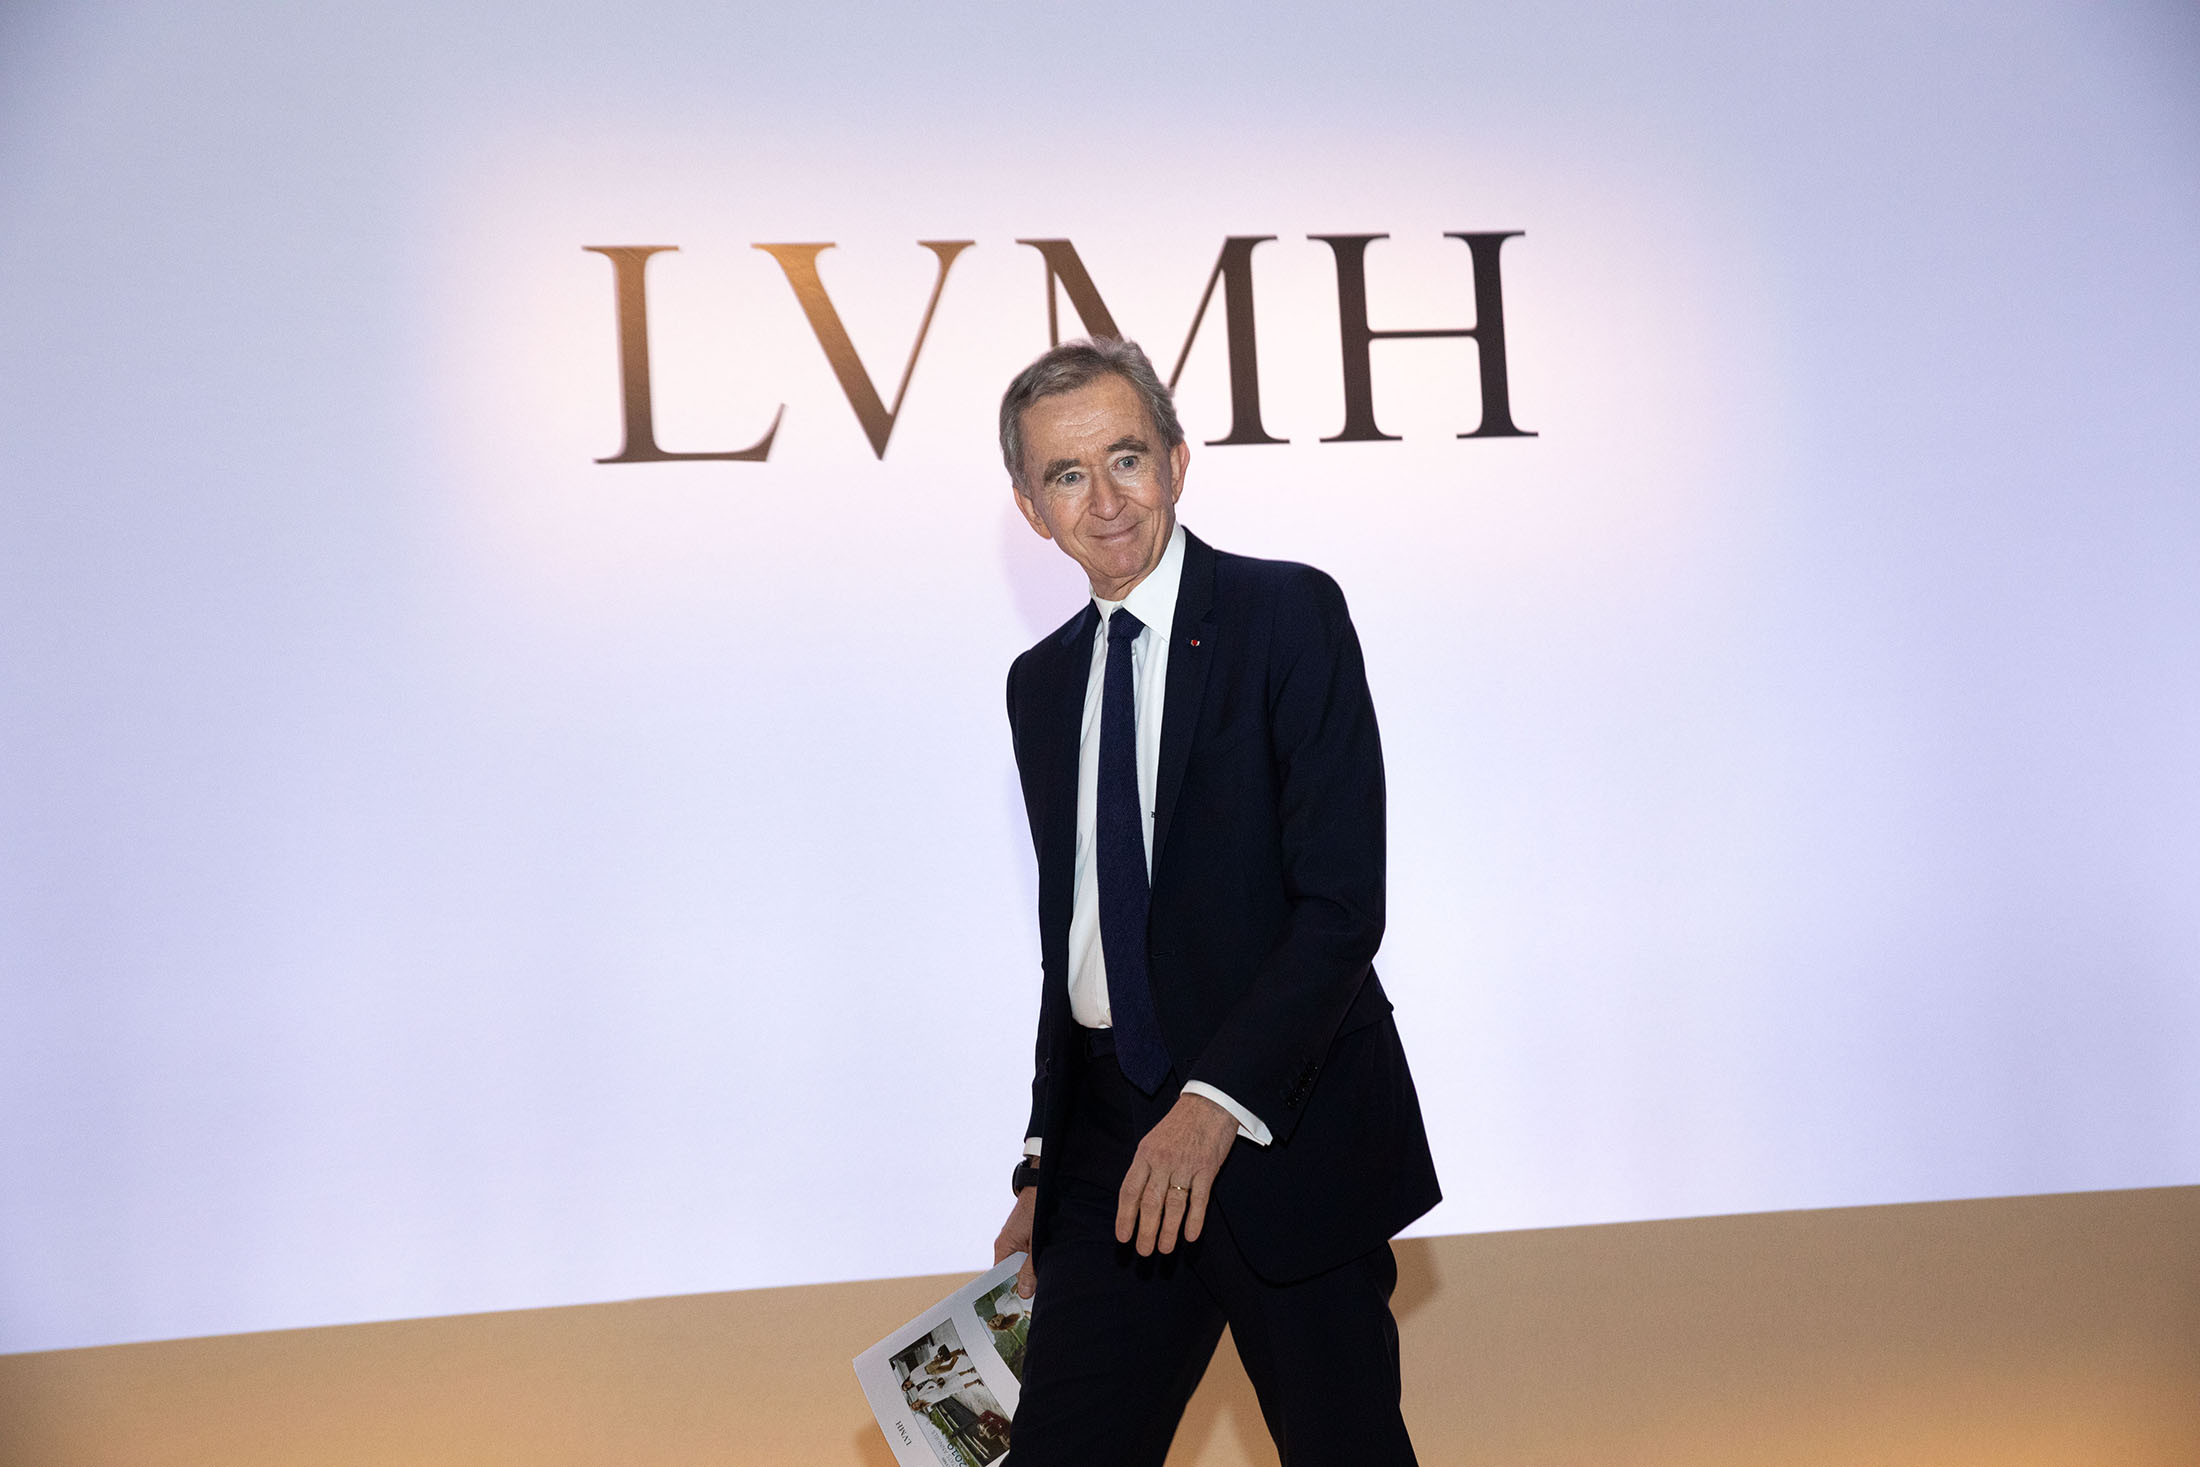 LVMH: The Luxury Juggernaut That Just Keeps Rolling